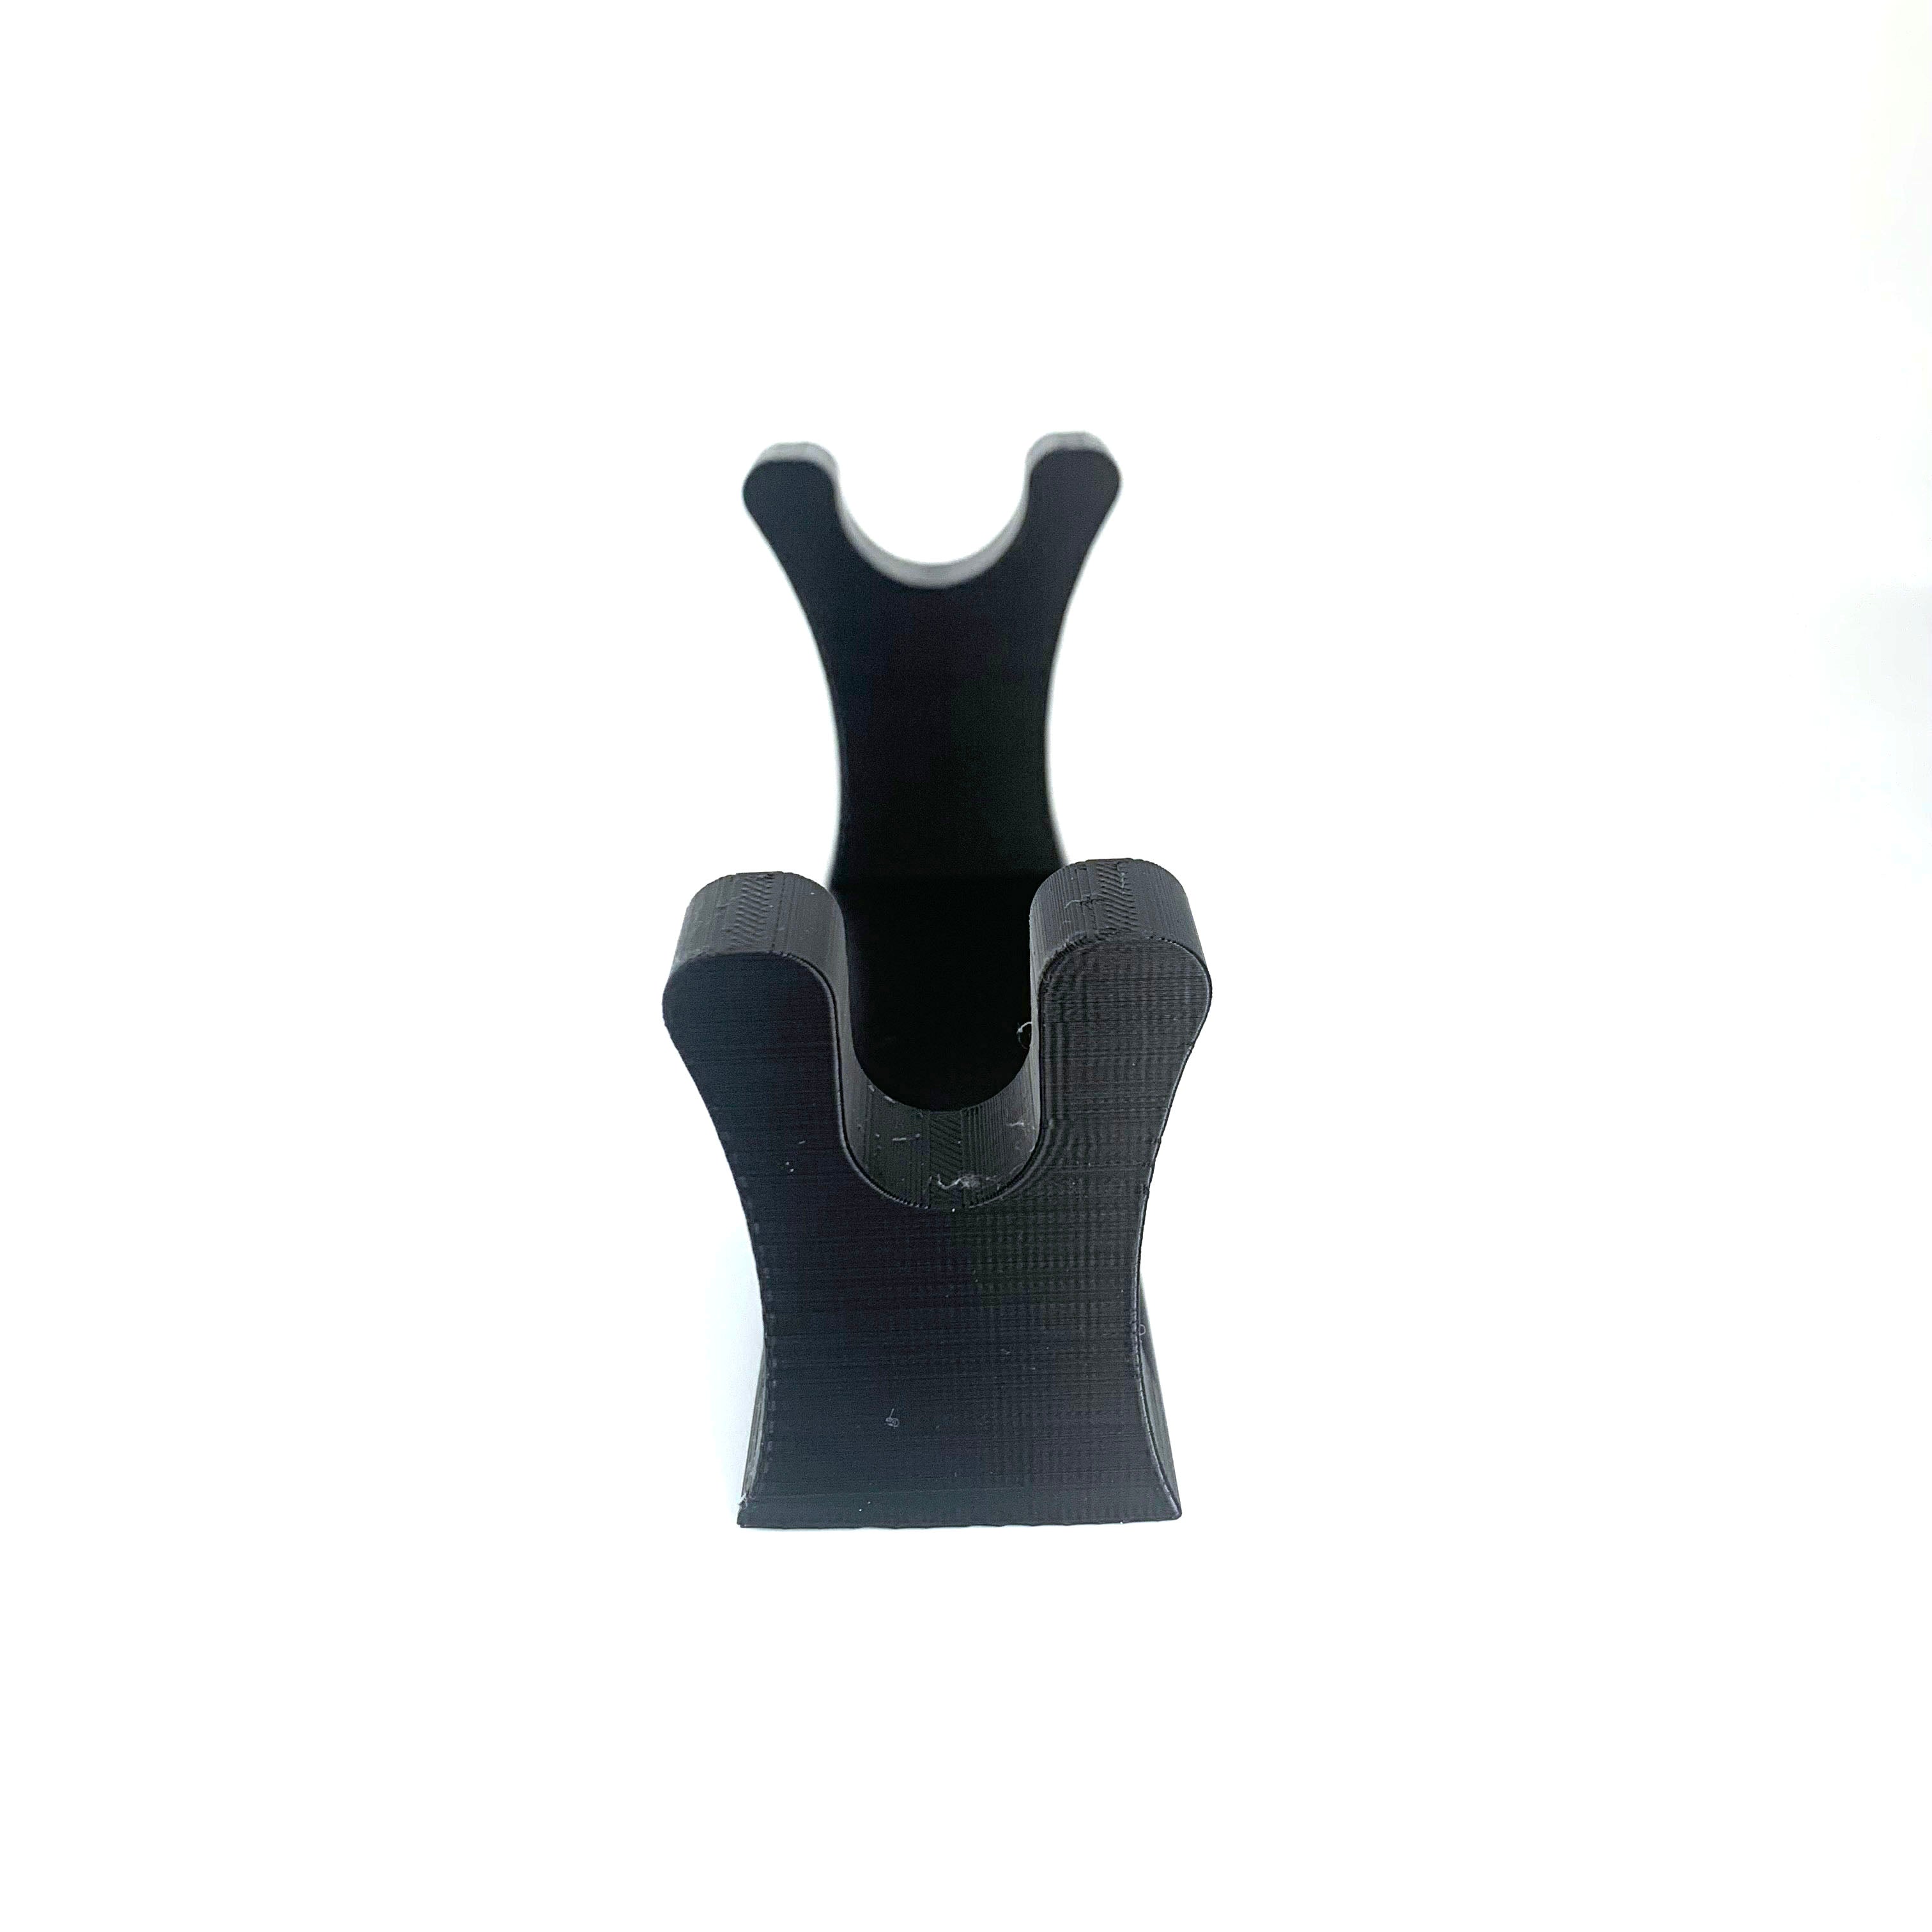 3D Printed Khukuri Stand - Black - RPI Supplies